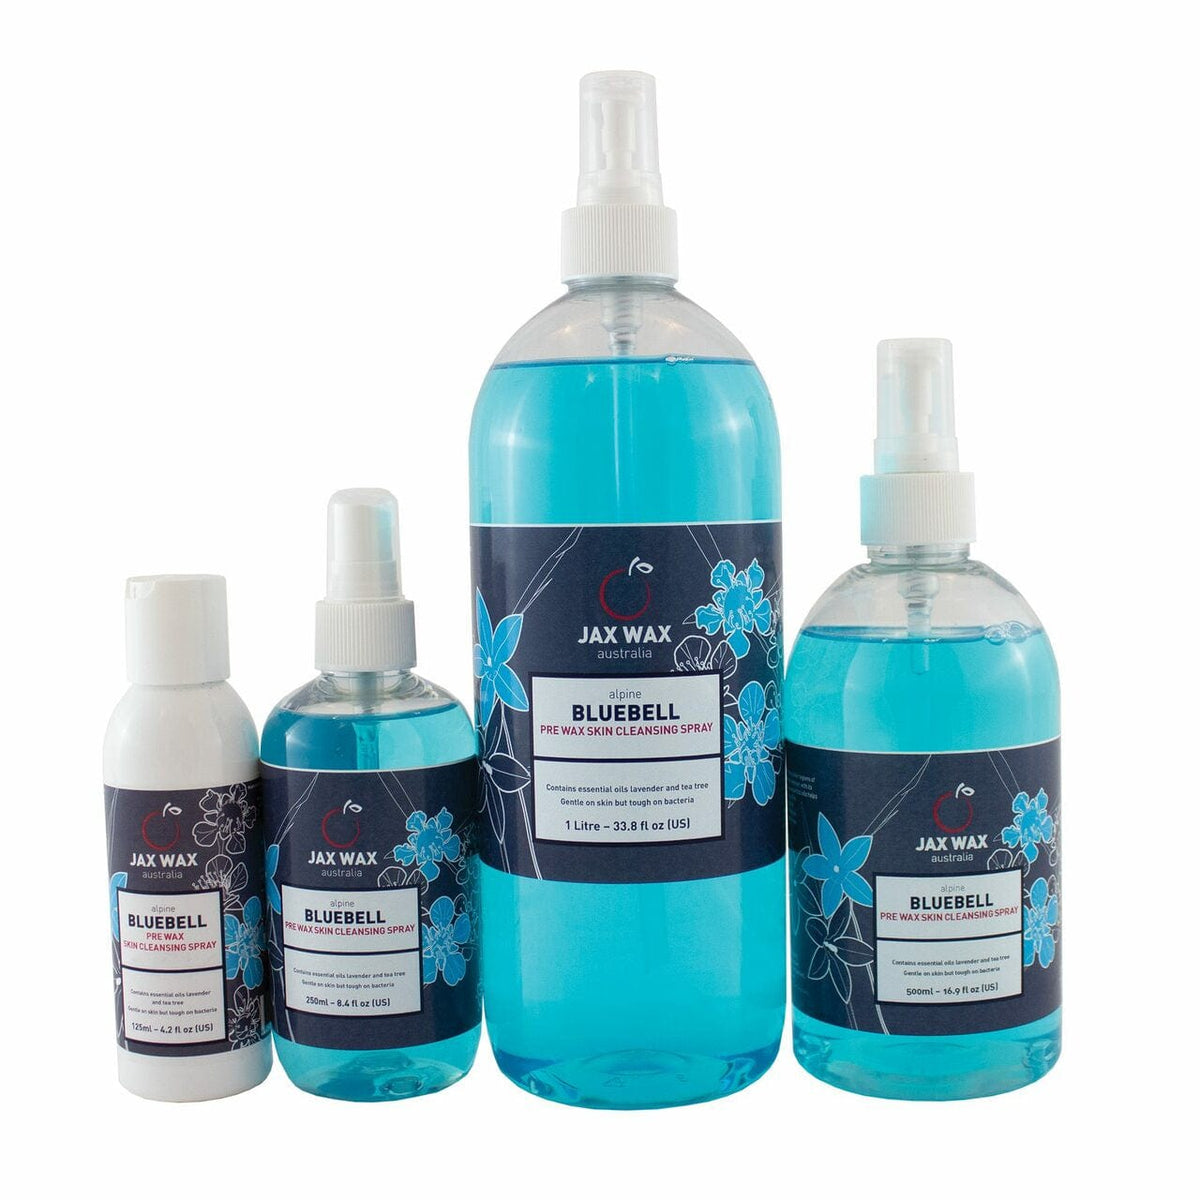 Alpine Bluebell Pre Wax Skin Cleansing Spray 100ml Beauty - Jax Wax - Luxe Pacifique